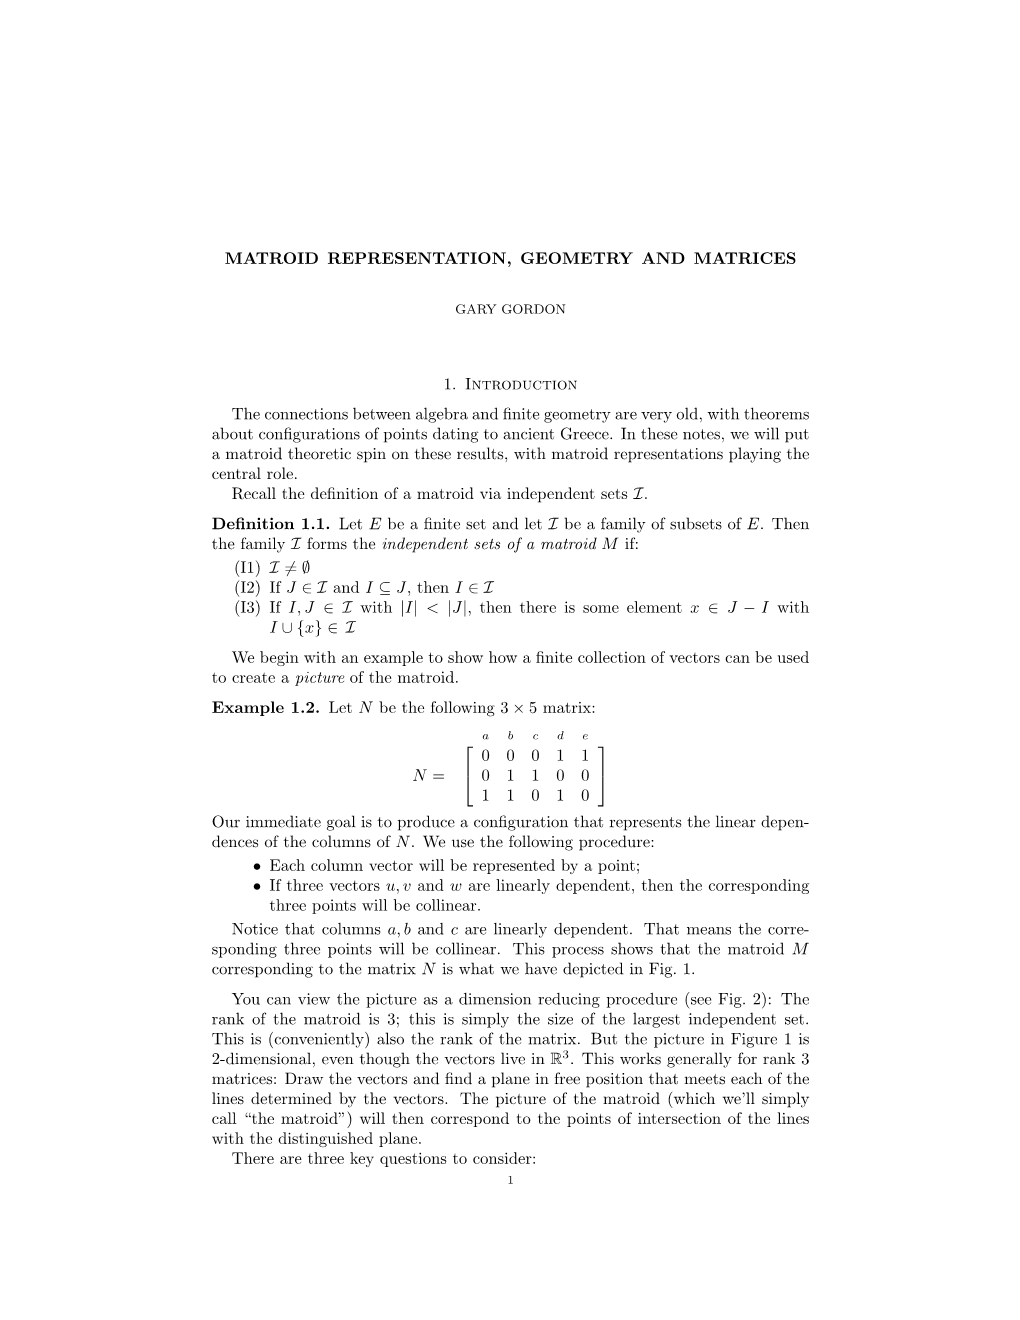 Matroid Representation, Geometry and Matrices 1